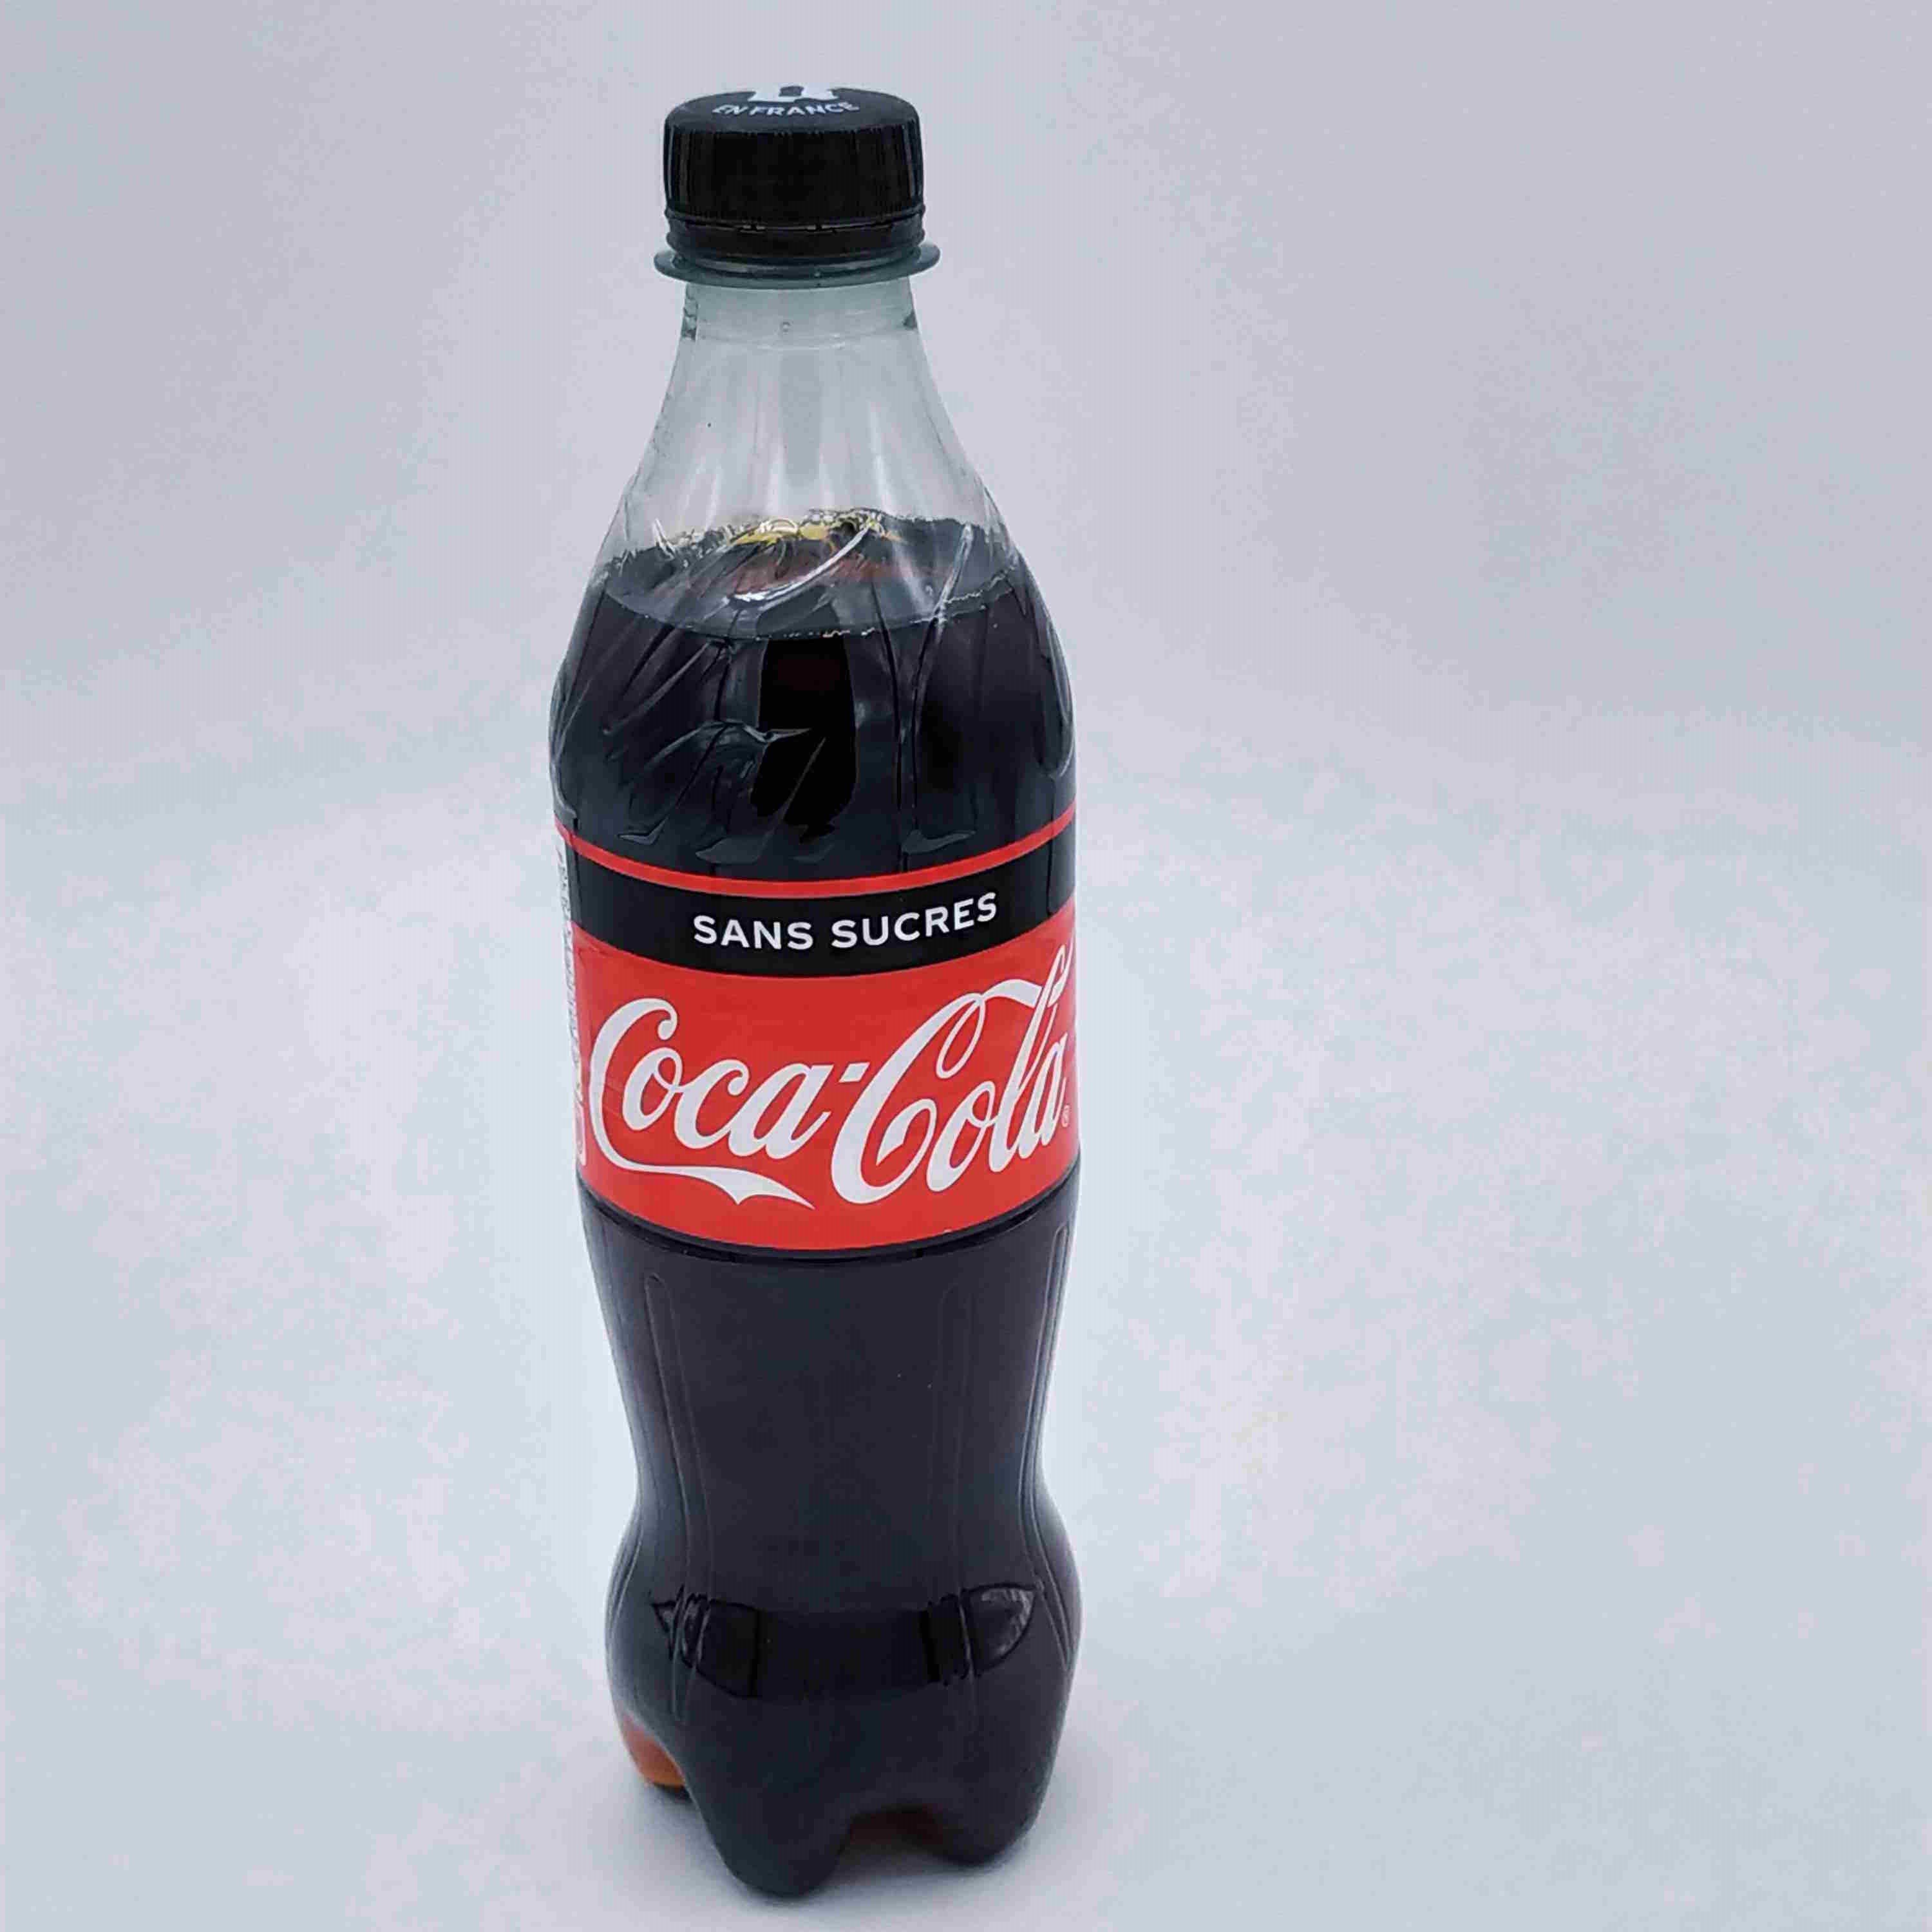 Coca Cola Zéro